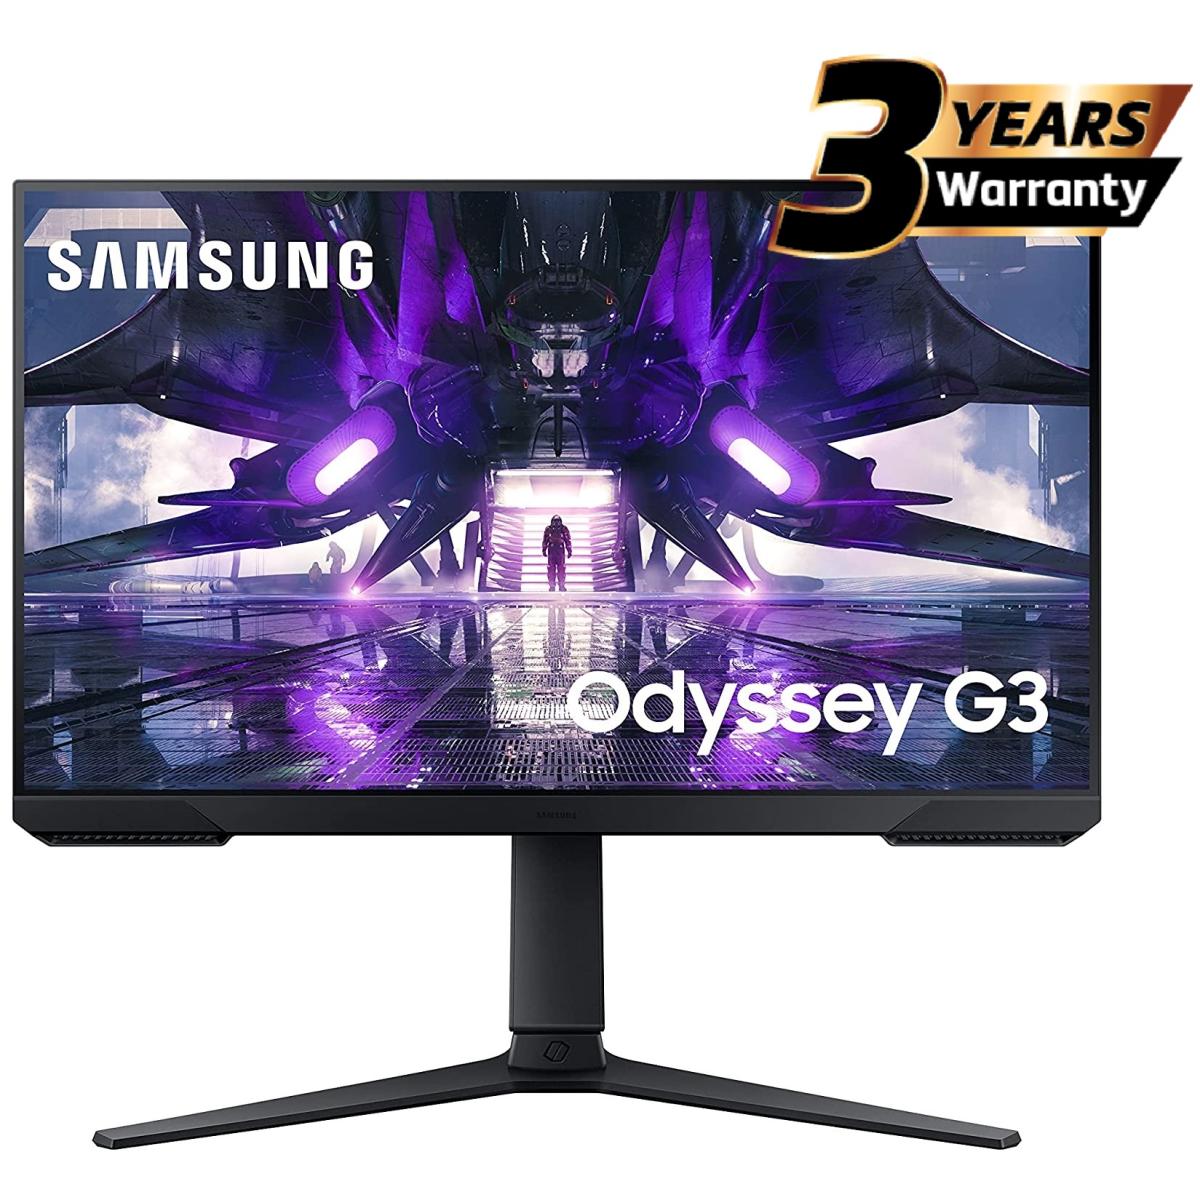 Samsung 27" AG320 Odyssey G3 Monitor